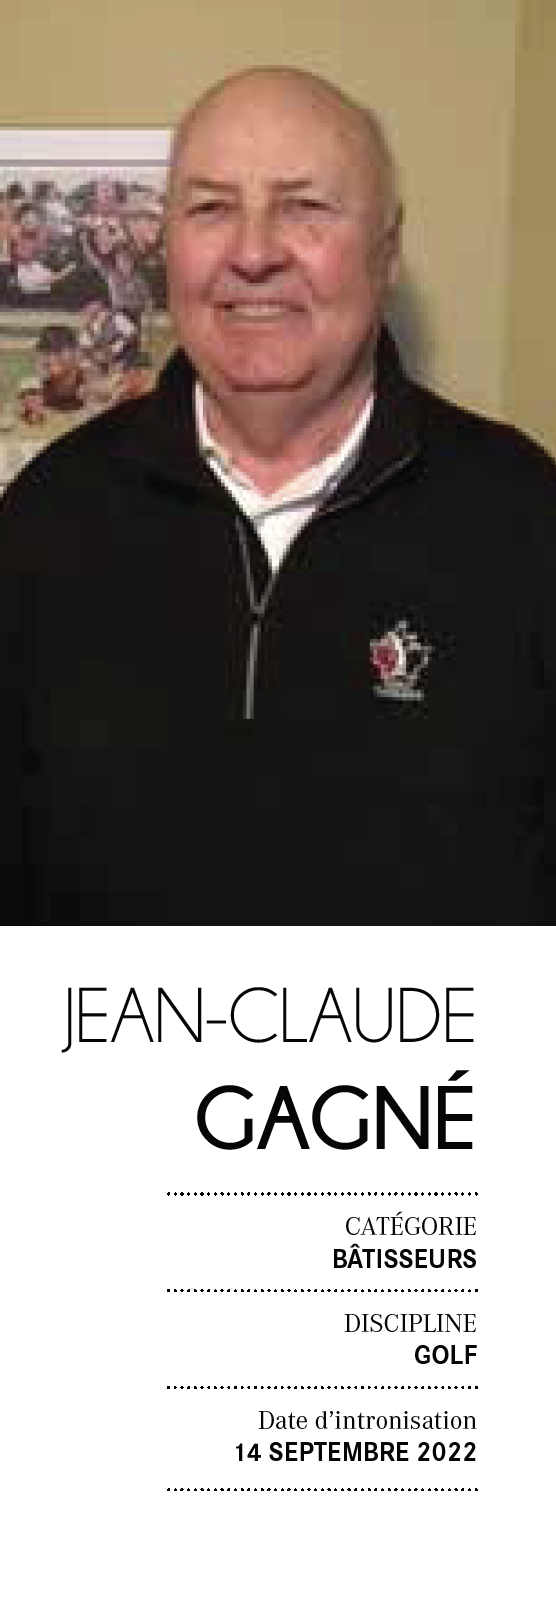 Jean-Claude Gagné